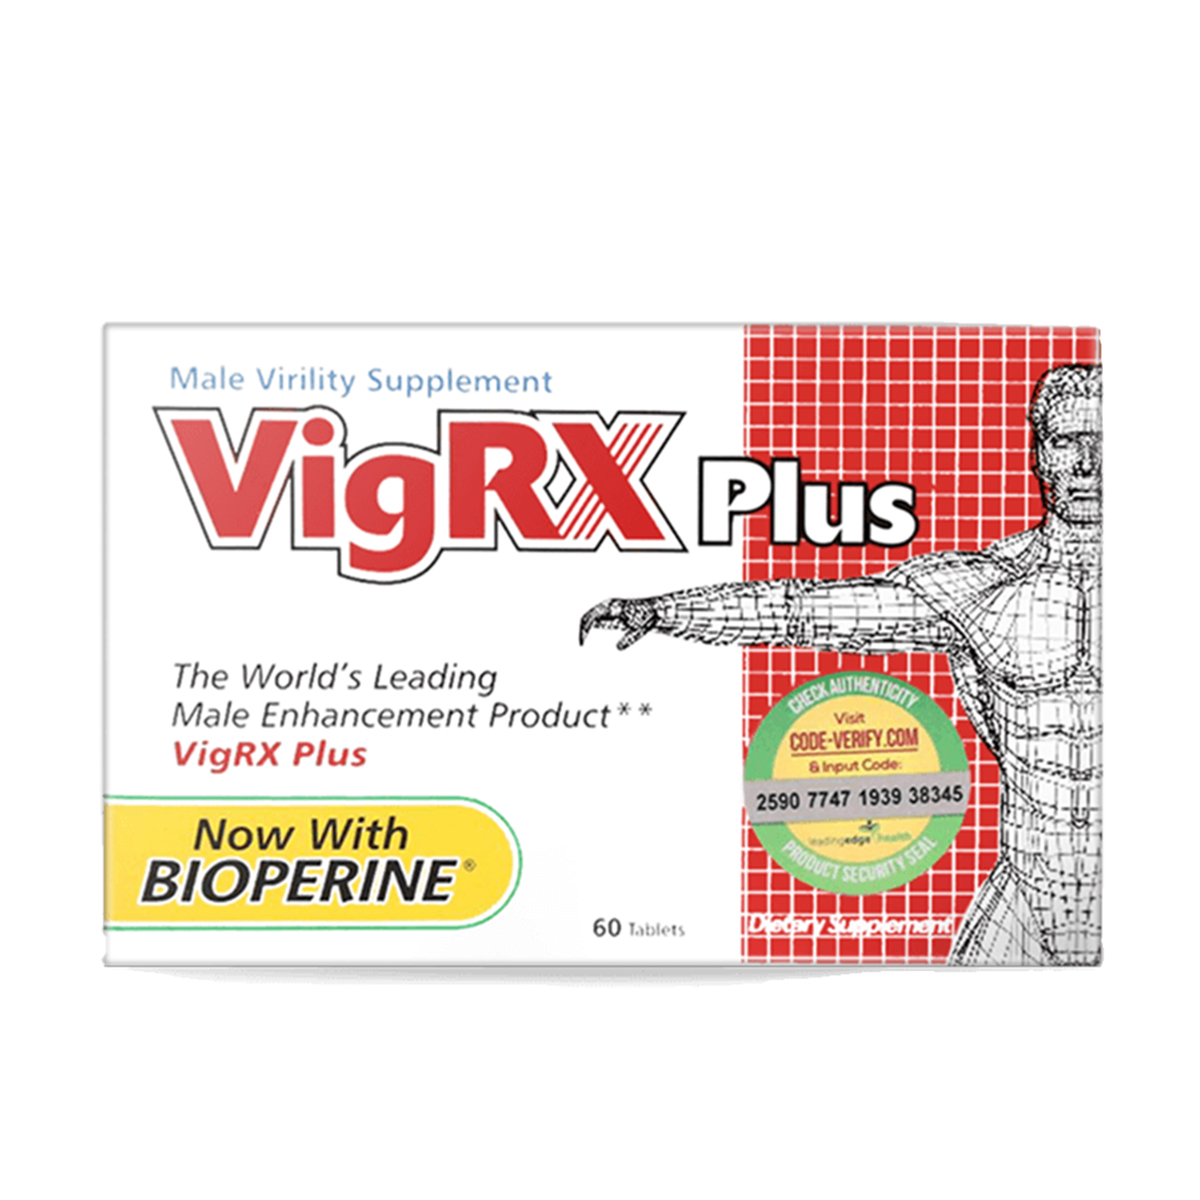 Leading Edge Health VigRx Plus - 6 Month Supply - 60 Capsules each; Oral Herbal Supplement